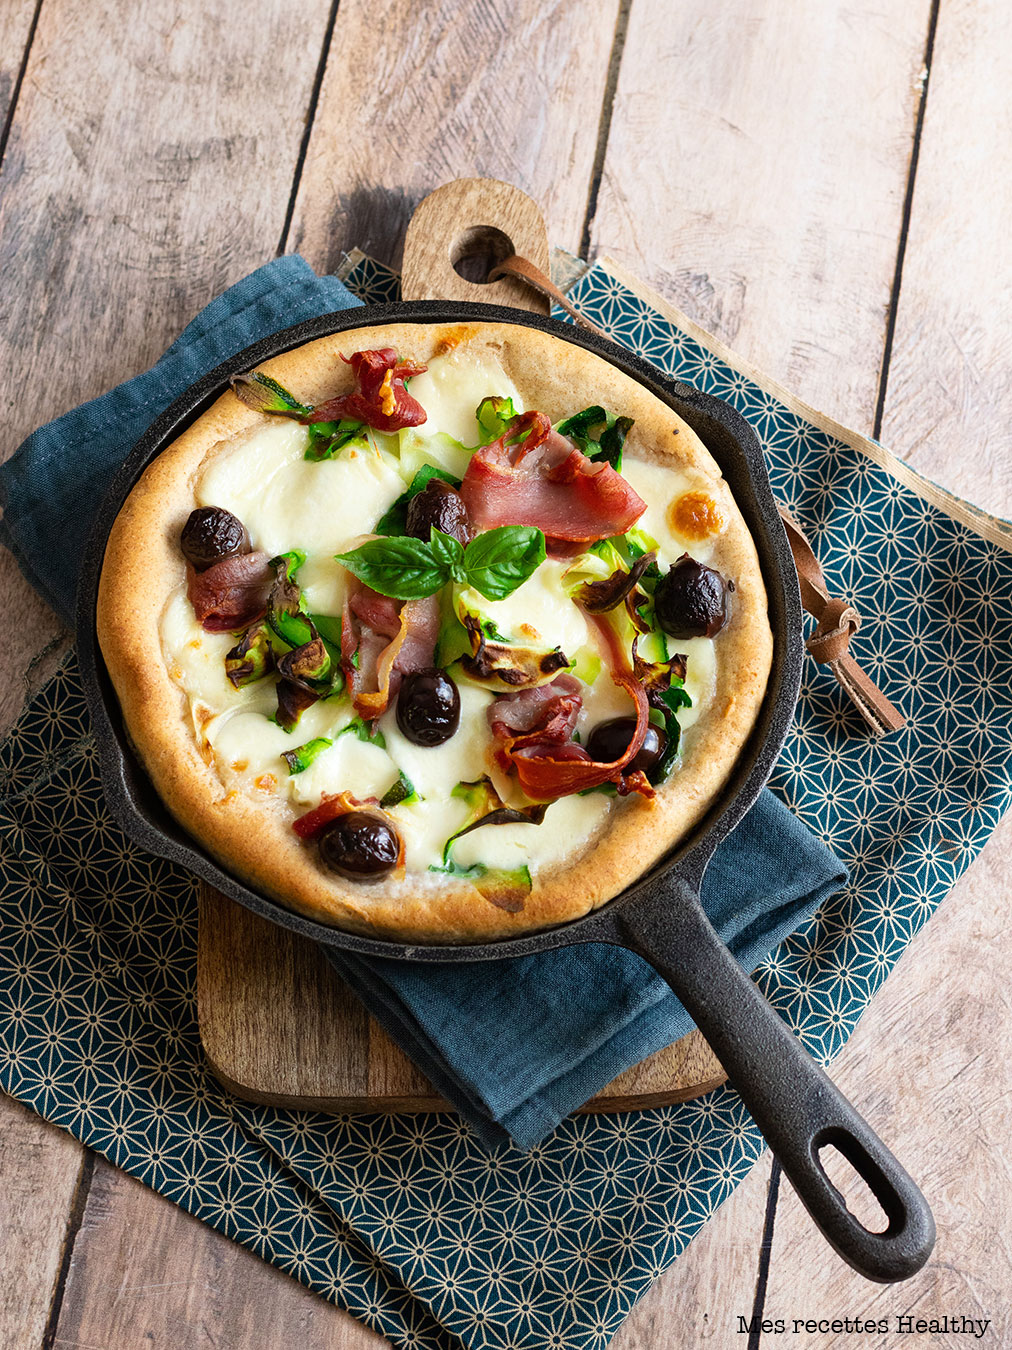 recette healthy-pizza poêle-mozzarella-courgette-tomate confite-pizza maison